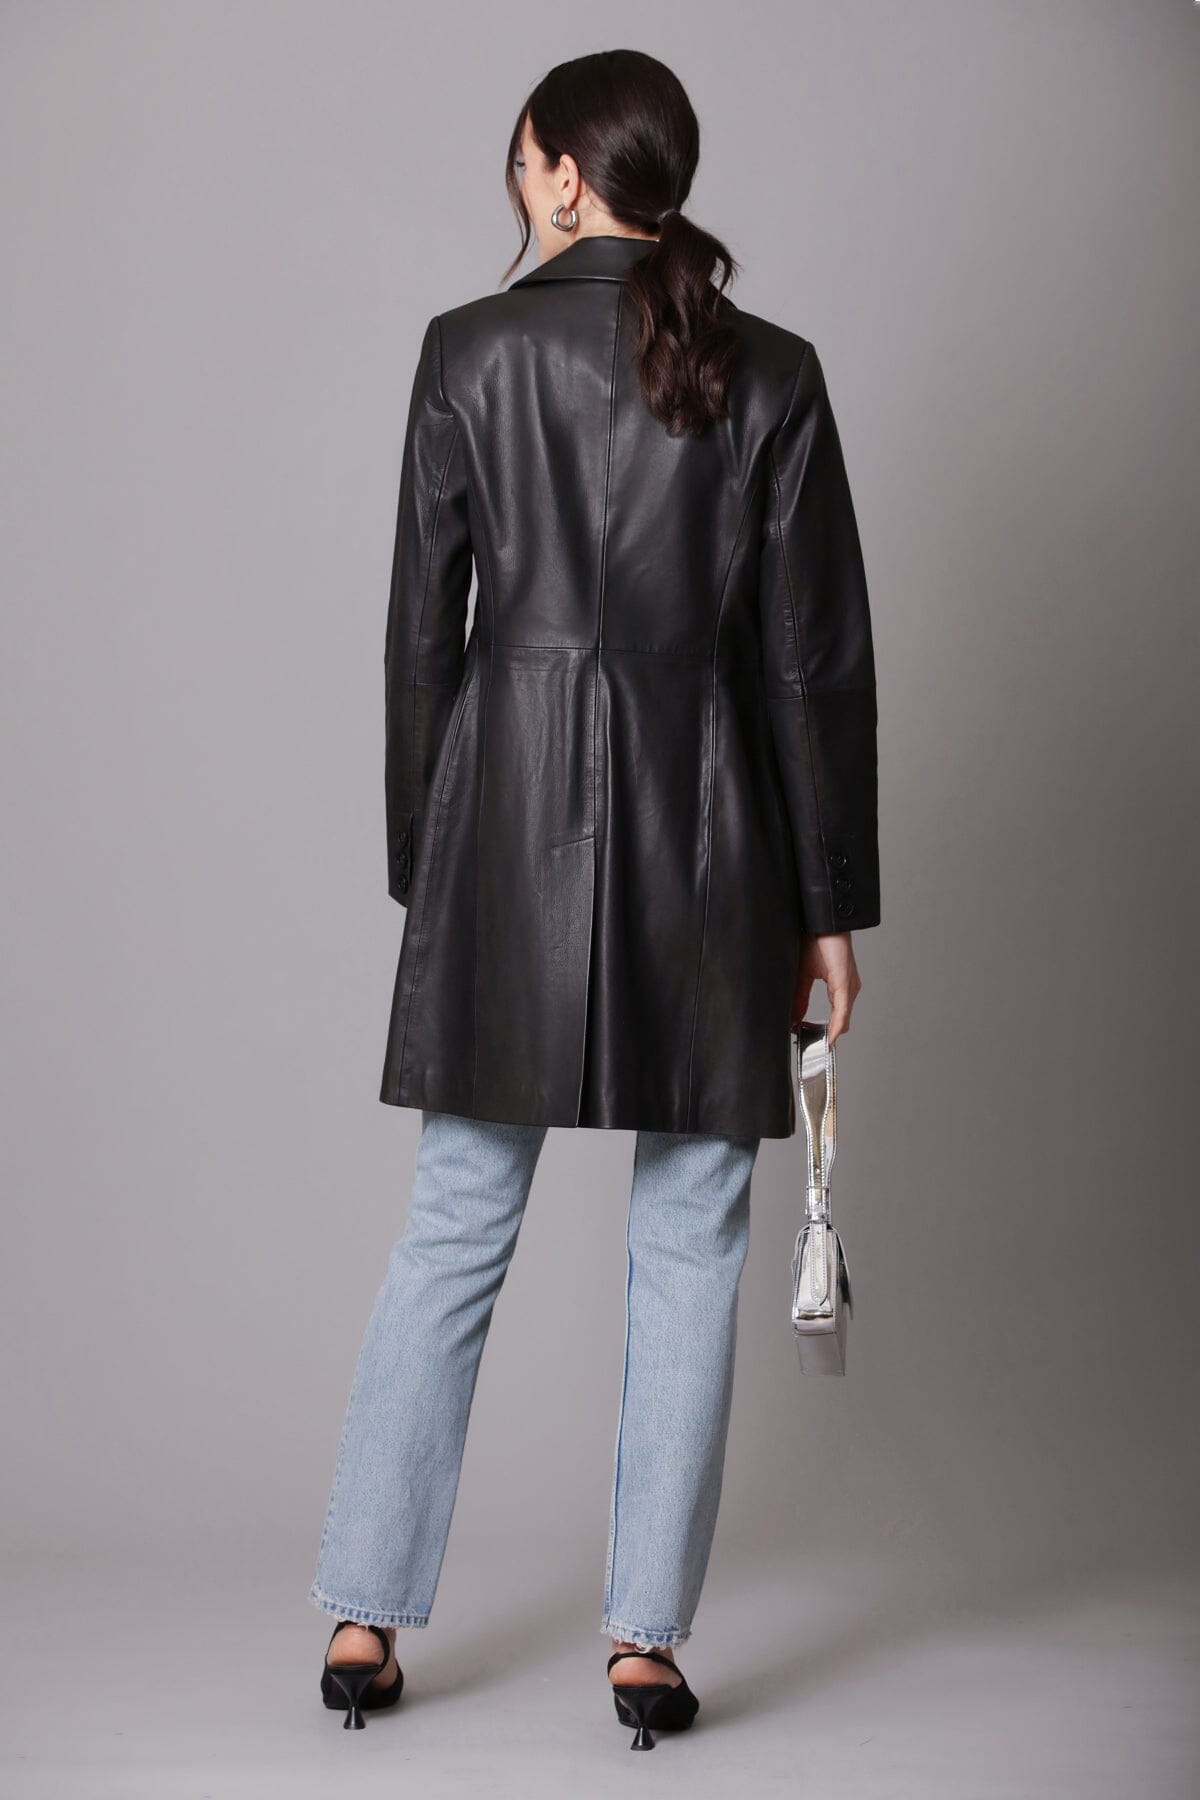 genuine leather single breasted topper coat black -  figure flattering designer fashion coats jackets for women